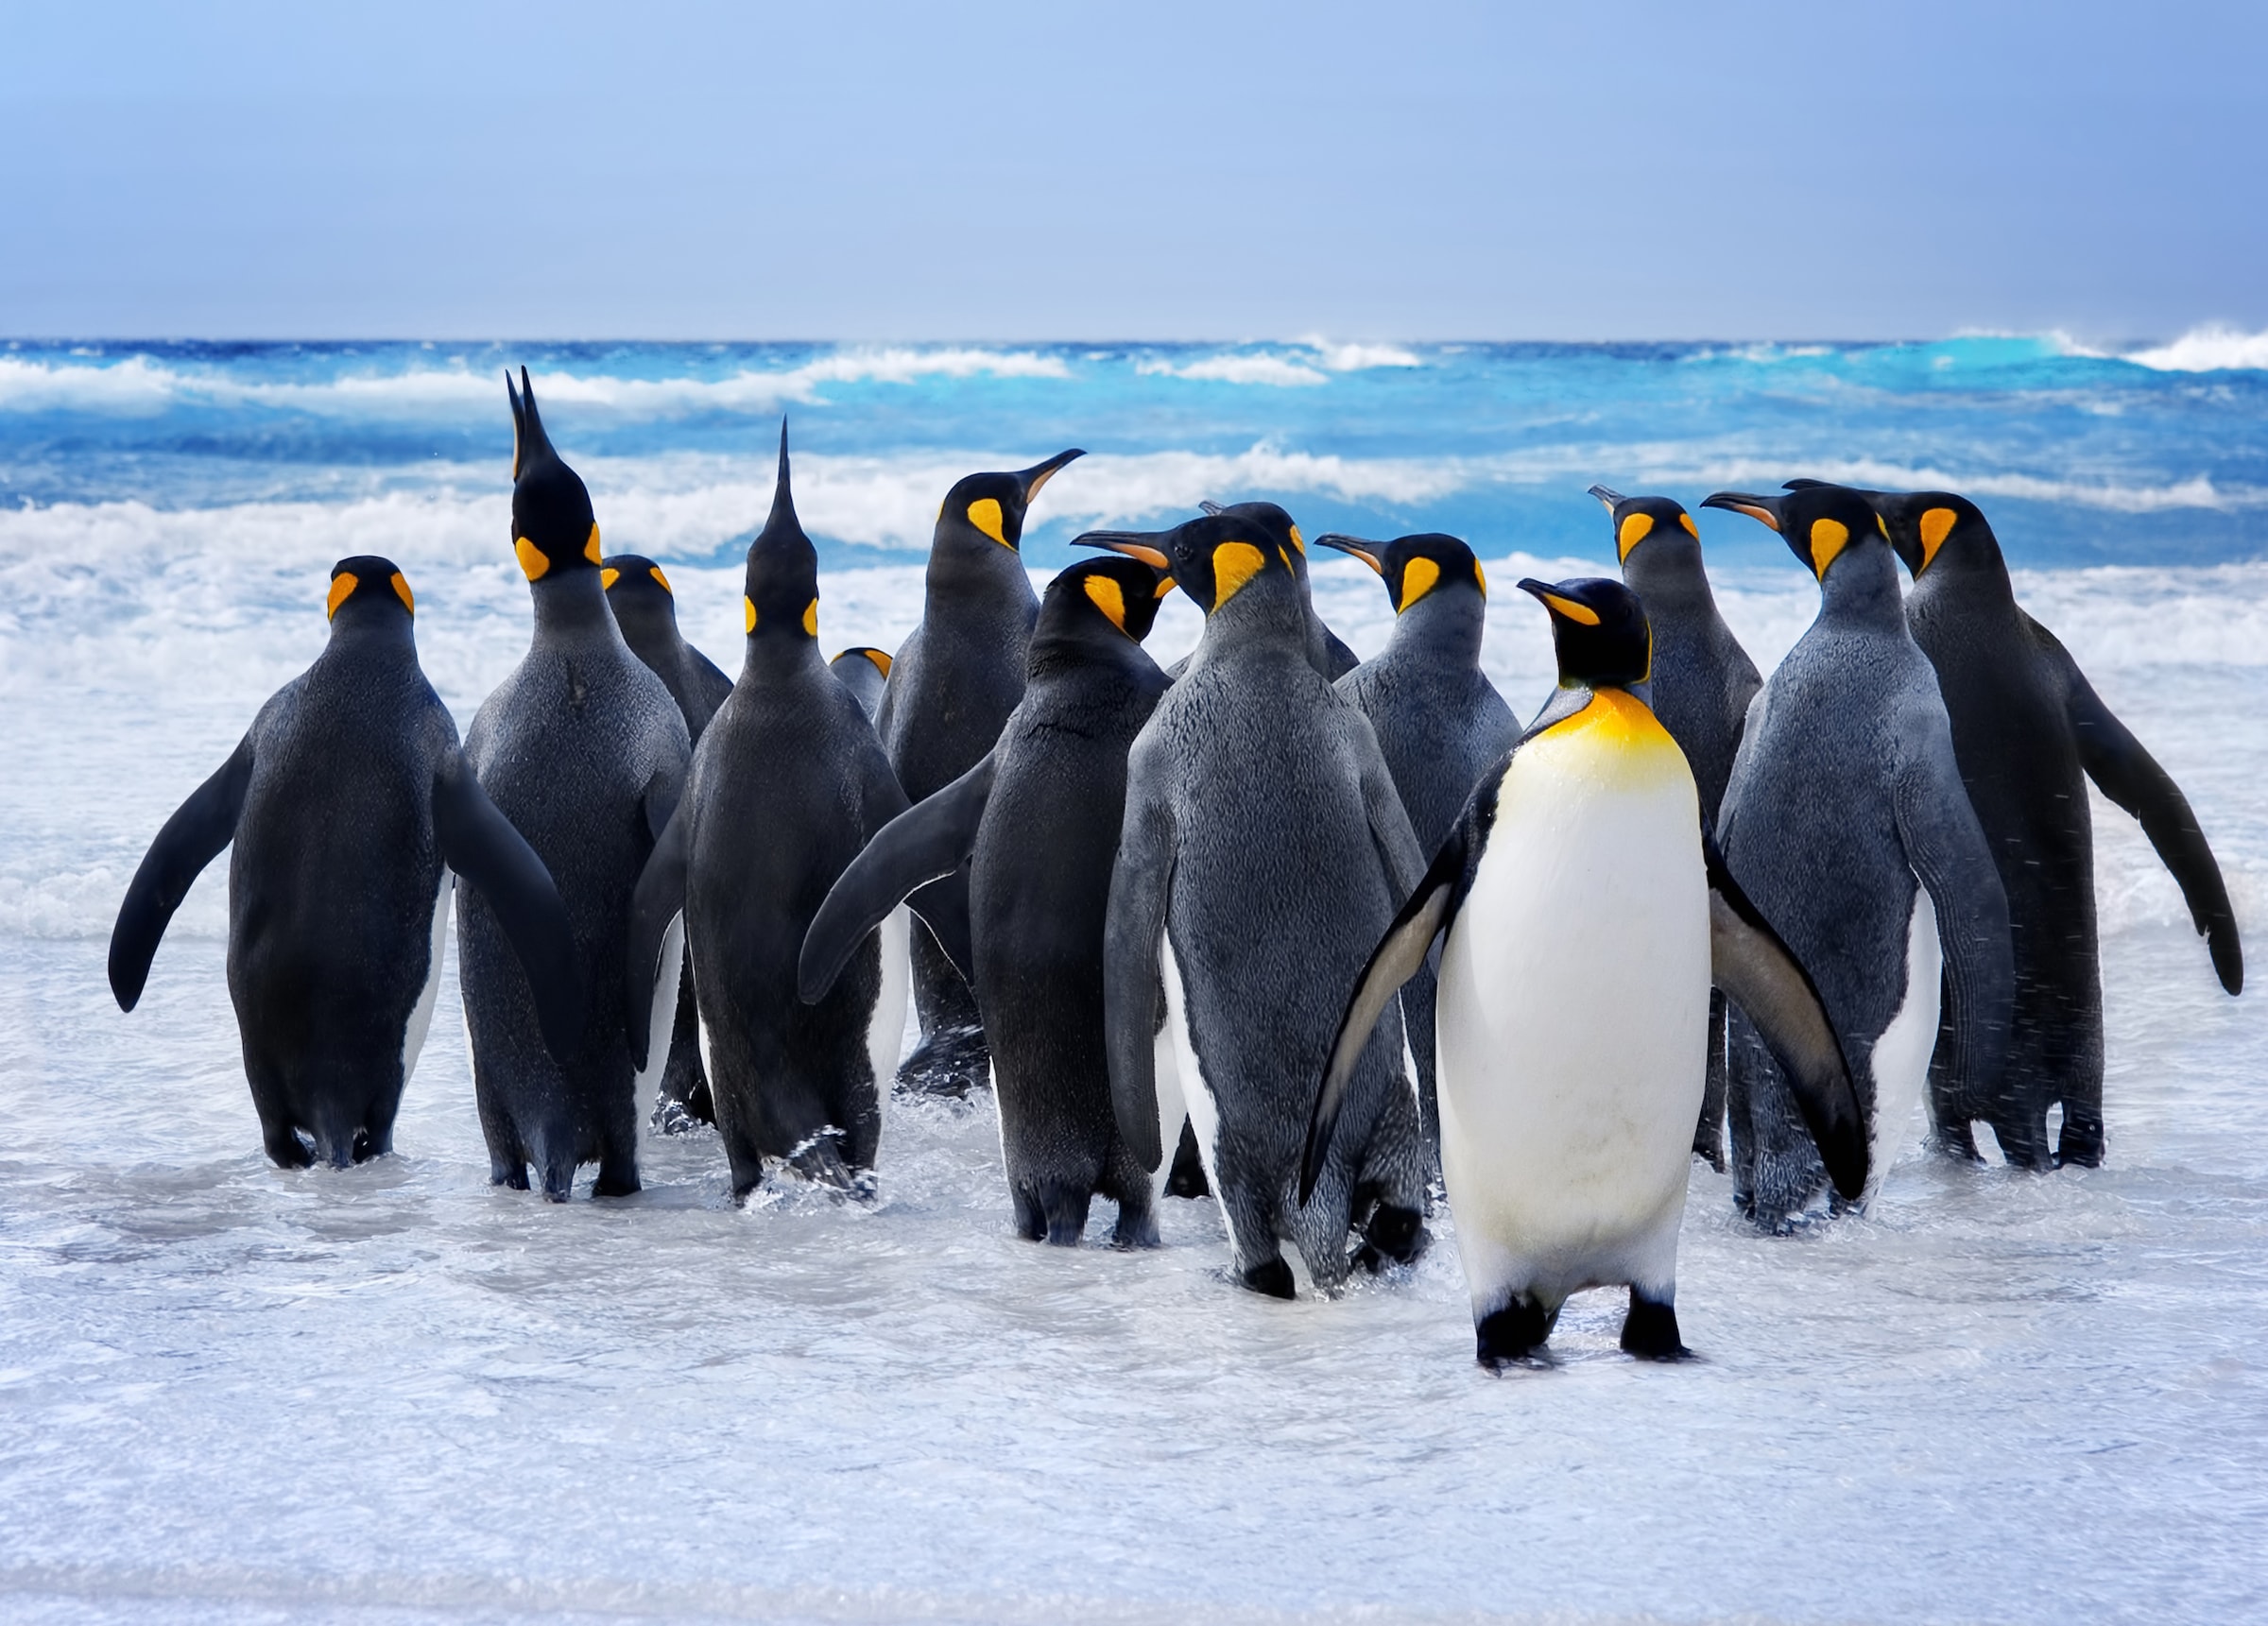 Papermoon Fototapete "King Penguins"